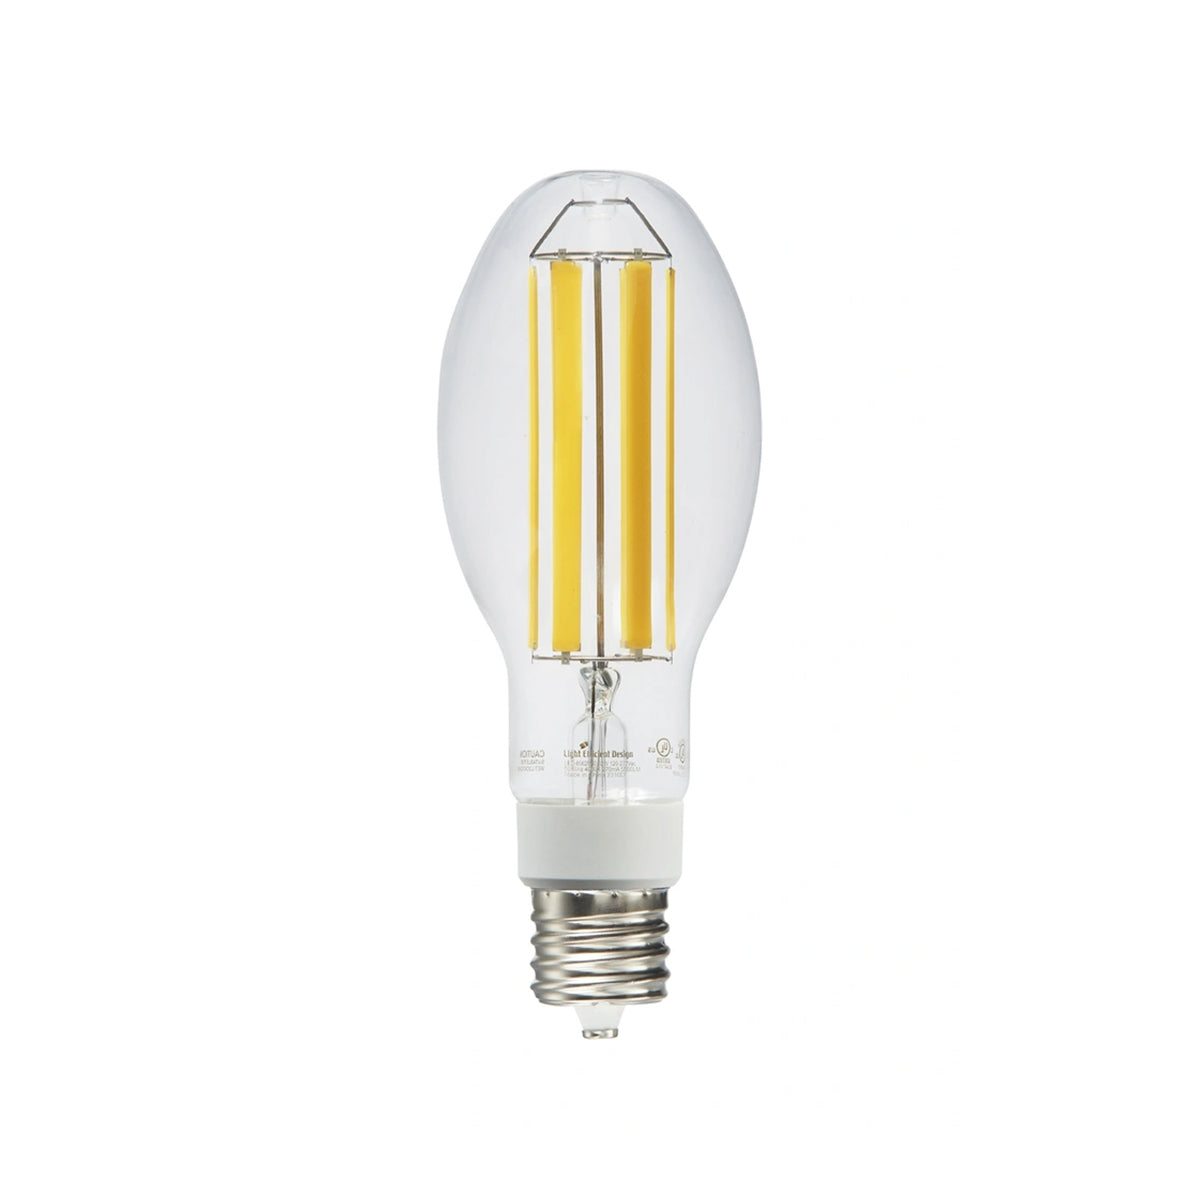 ED28 Filament Style Retrofit Bulb, 250W HID, 45 Watt, 6000 Lumens, 2200K, EX39 Mogul Extended Base, Clear Finish